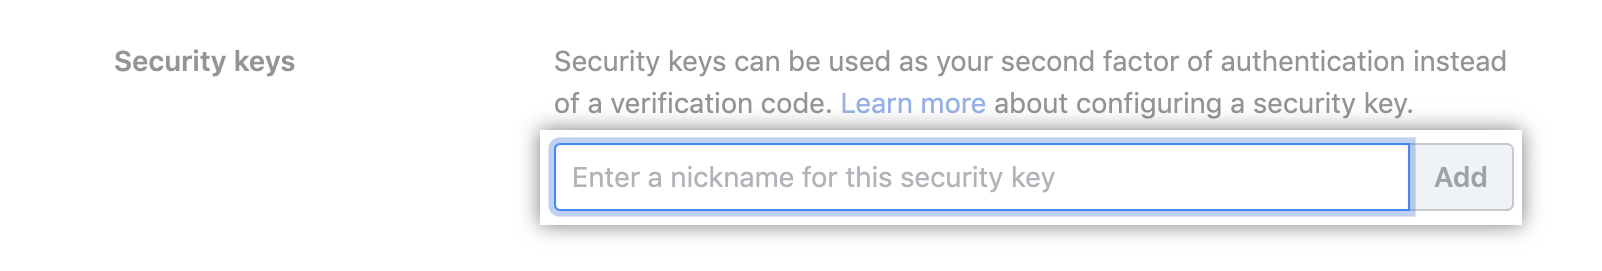 Providing a nickname for a security key